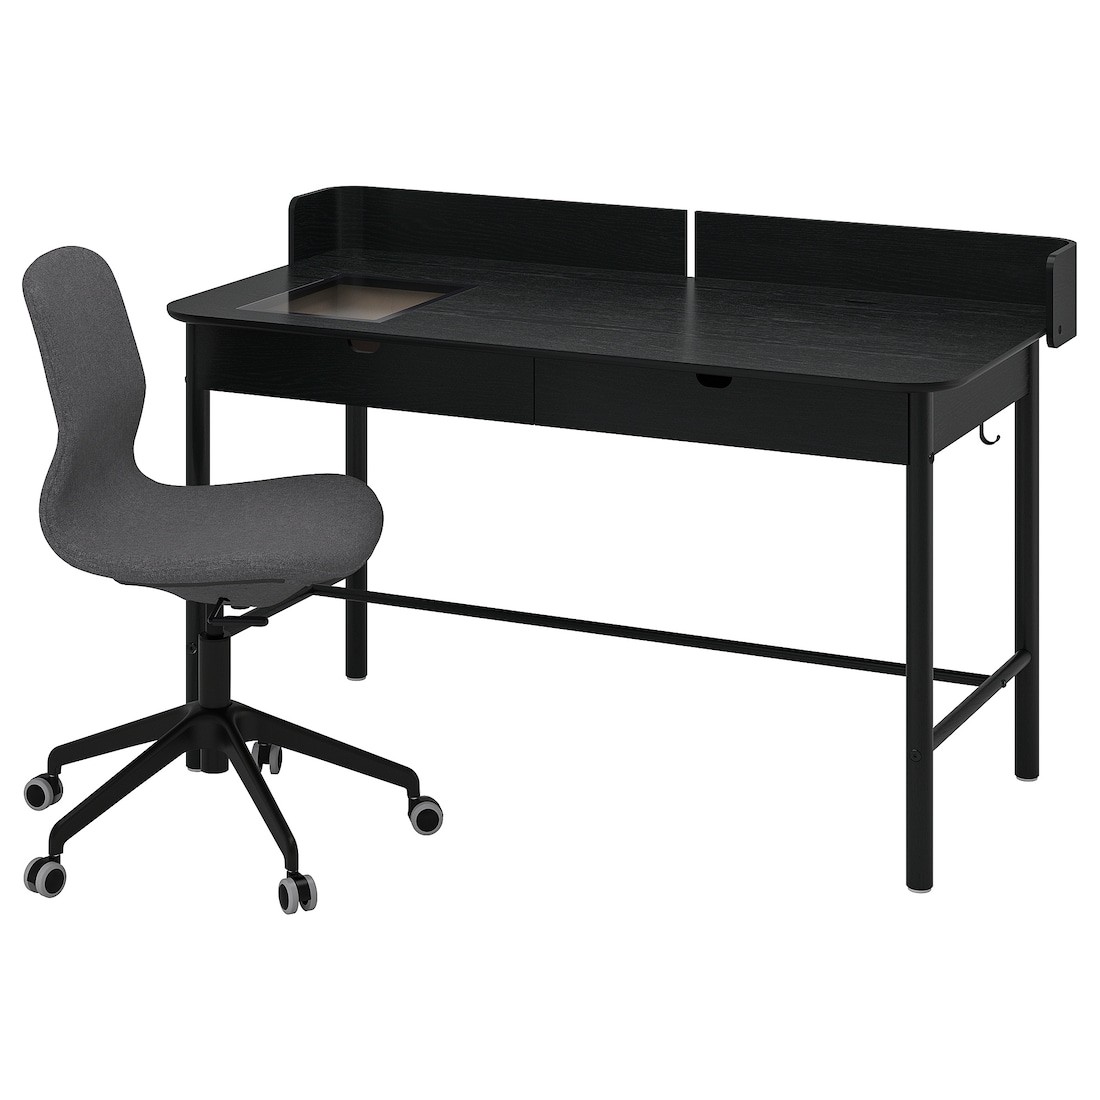 RIDSPÖ / LÅNGFJÄLL Письменный стол и стул, антрацит темно-серый/черный